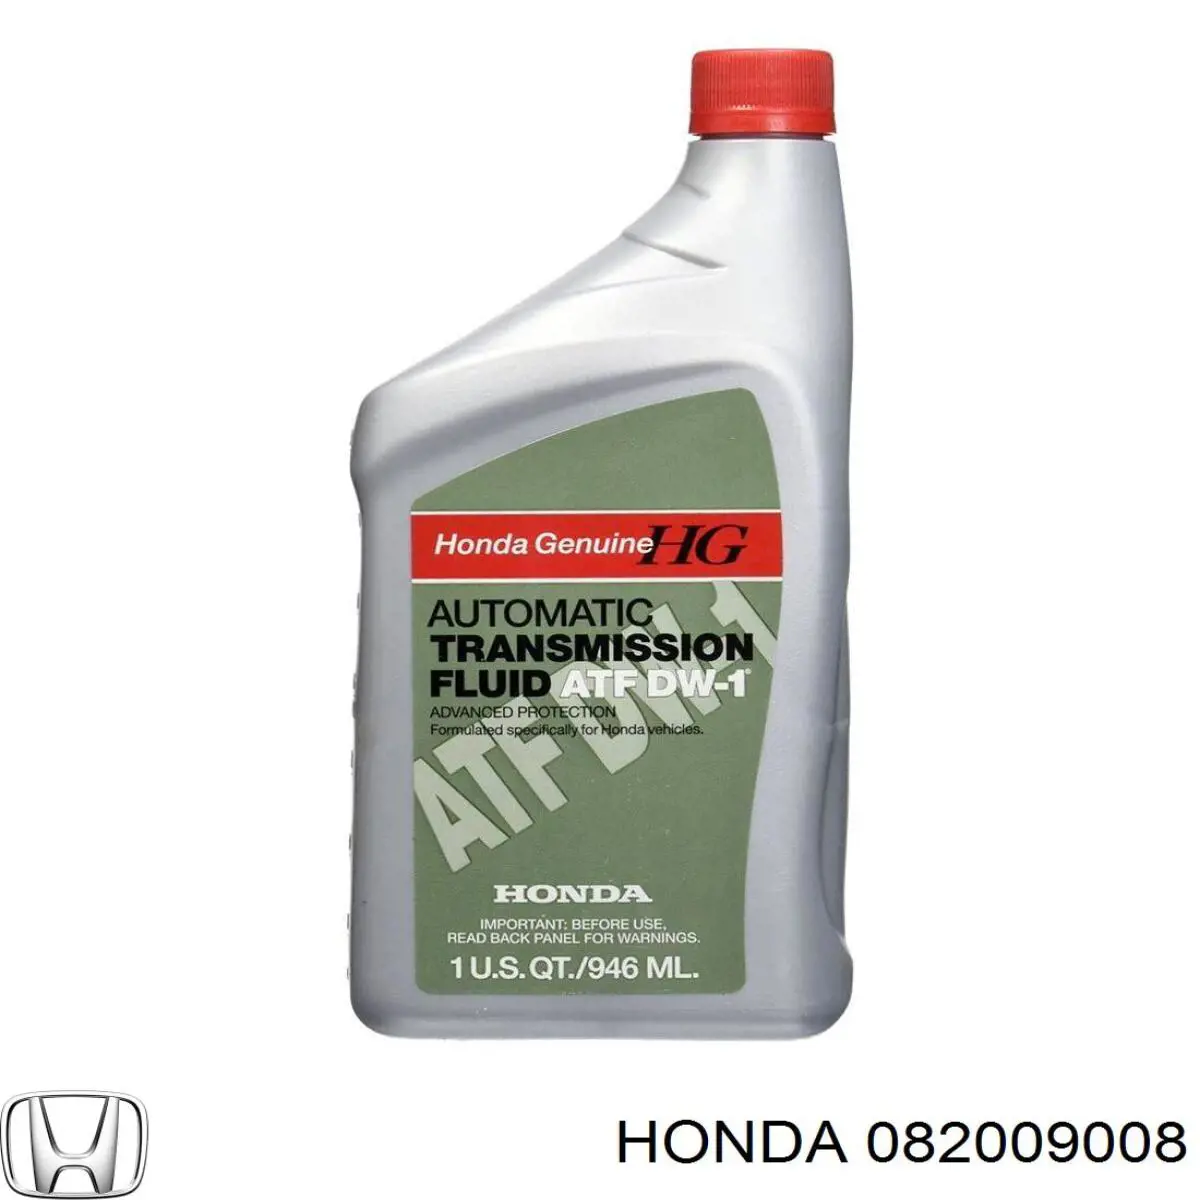 Honda ATF DW-1 Fluid Sintético 1 L Aceite transmisión (082009008)